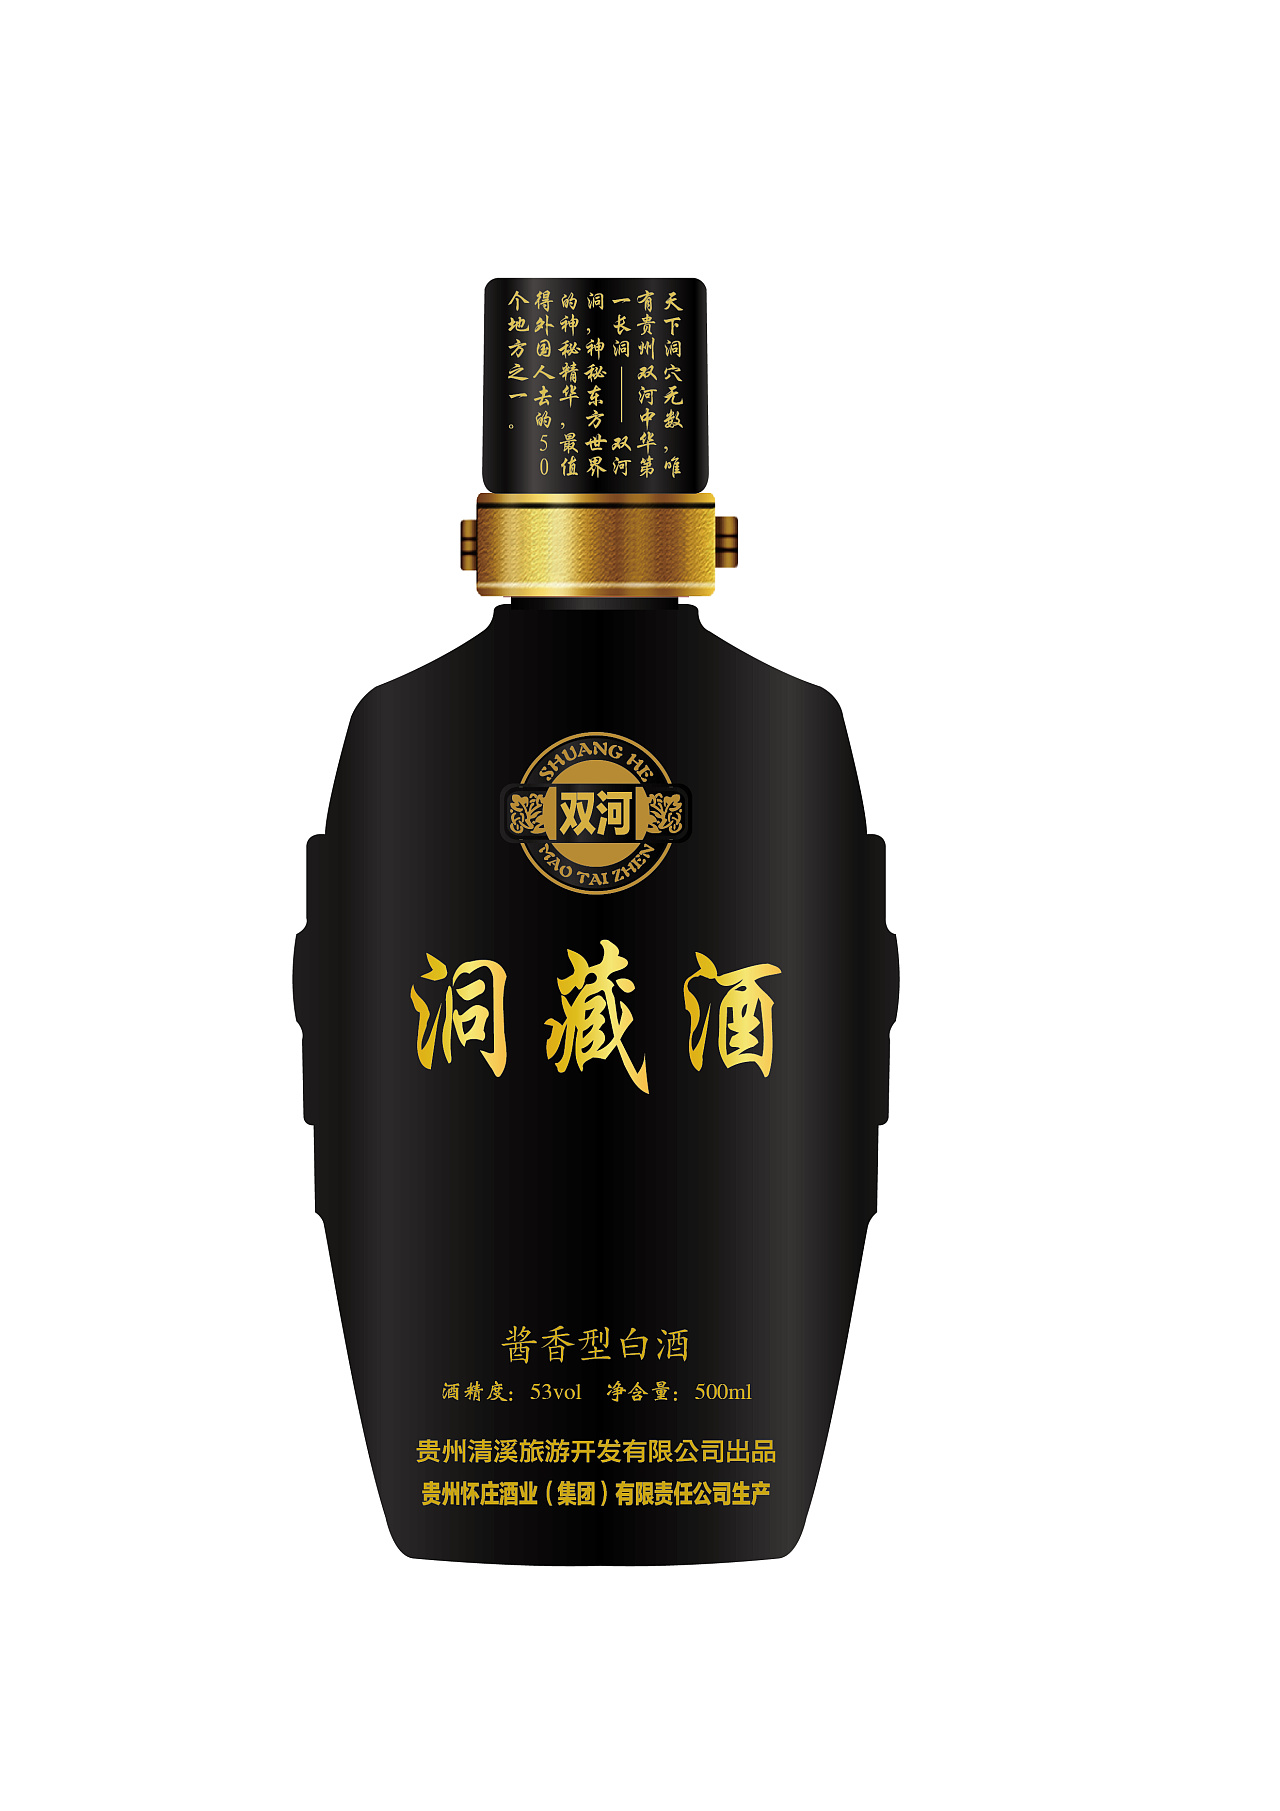 Maotai-flavor liquor bottle design